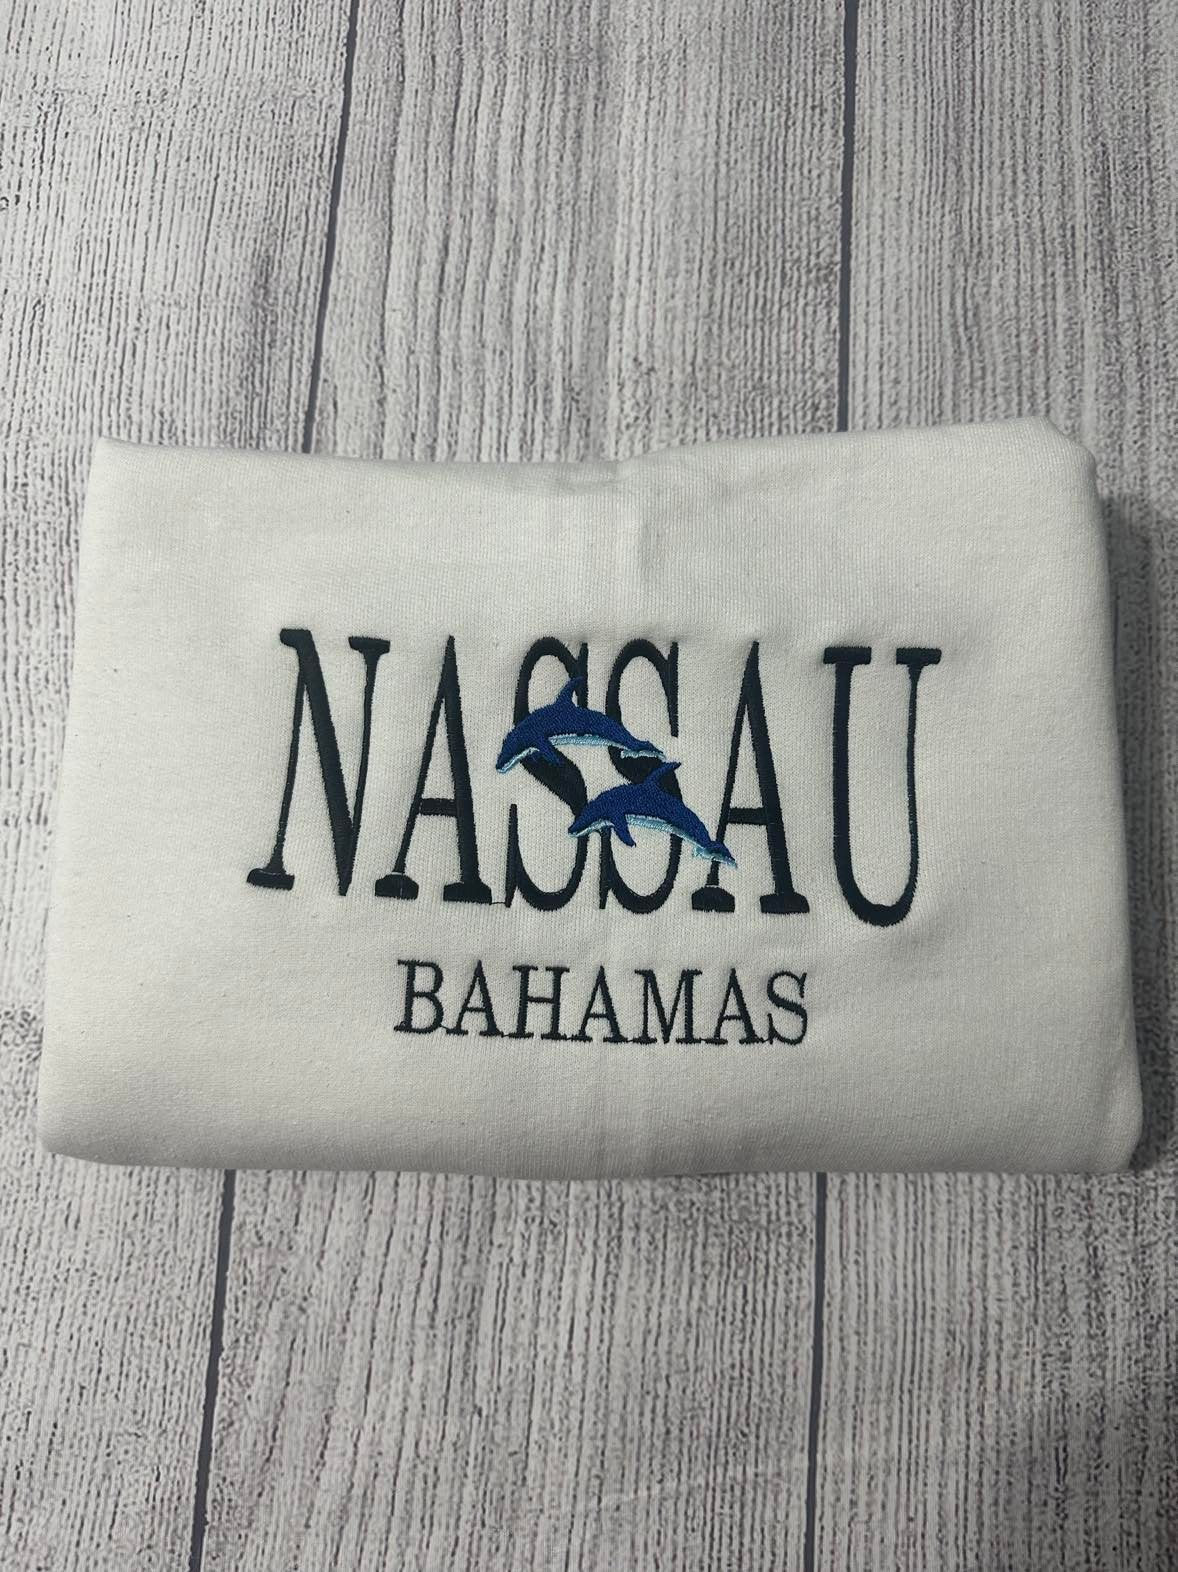 NASSAU BAHAMAS embroidered crewneck; Bahamas Crewneck perfect gift for Dolphin lovers